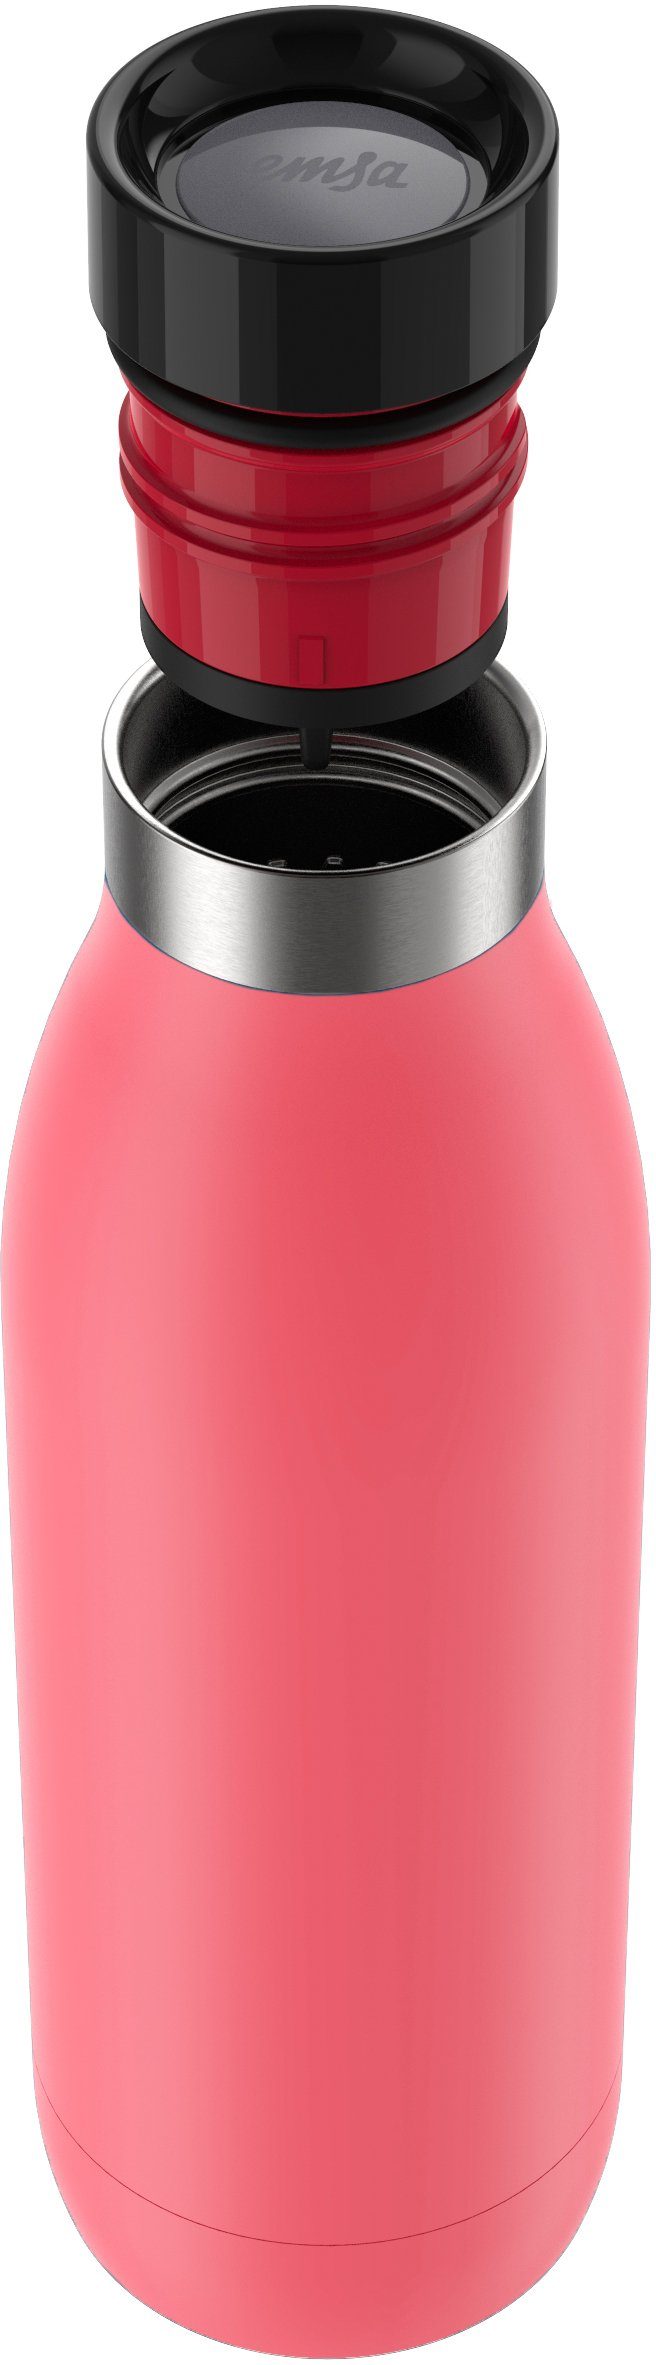 Emsa Trinkflasche Bludrop Color, koralle kühl, spülmaschinenfest Edelstahl, Quick-Press warm/24h 12h Deckel